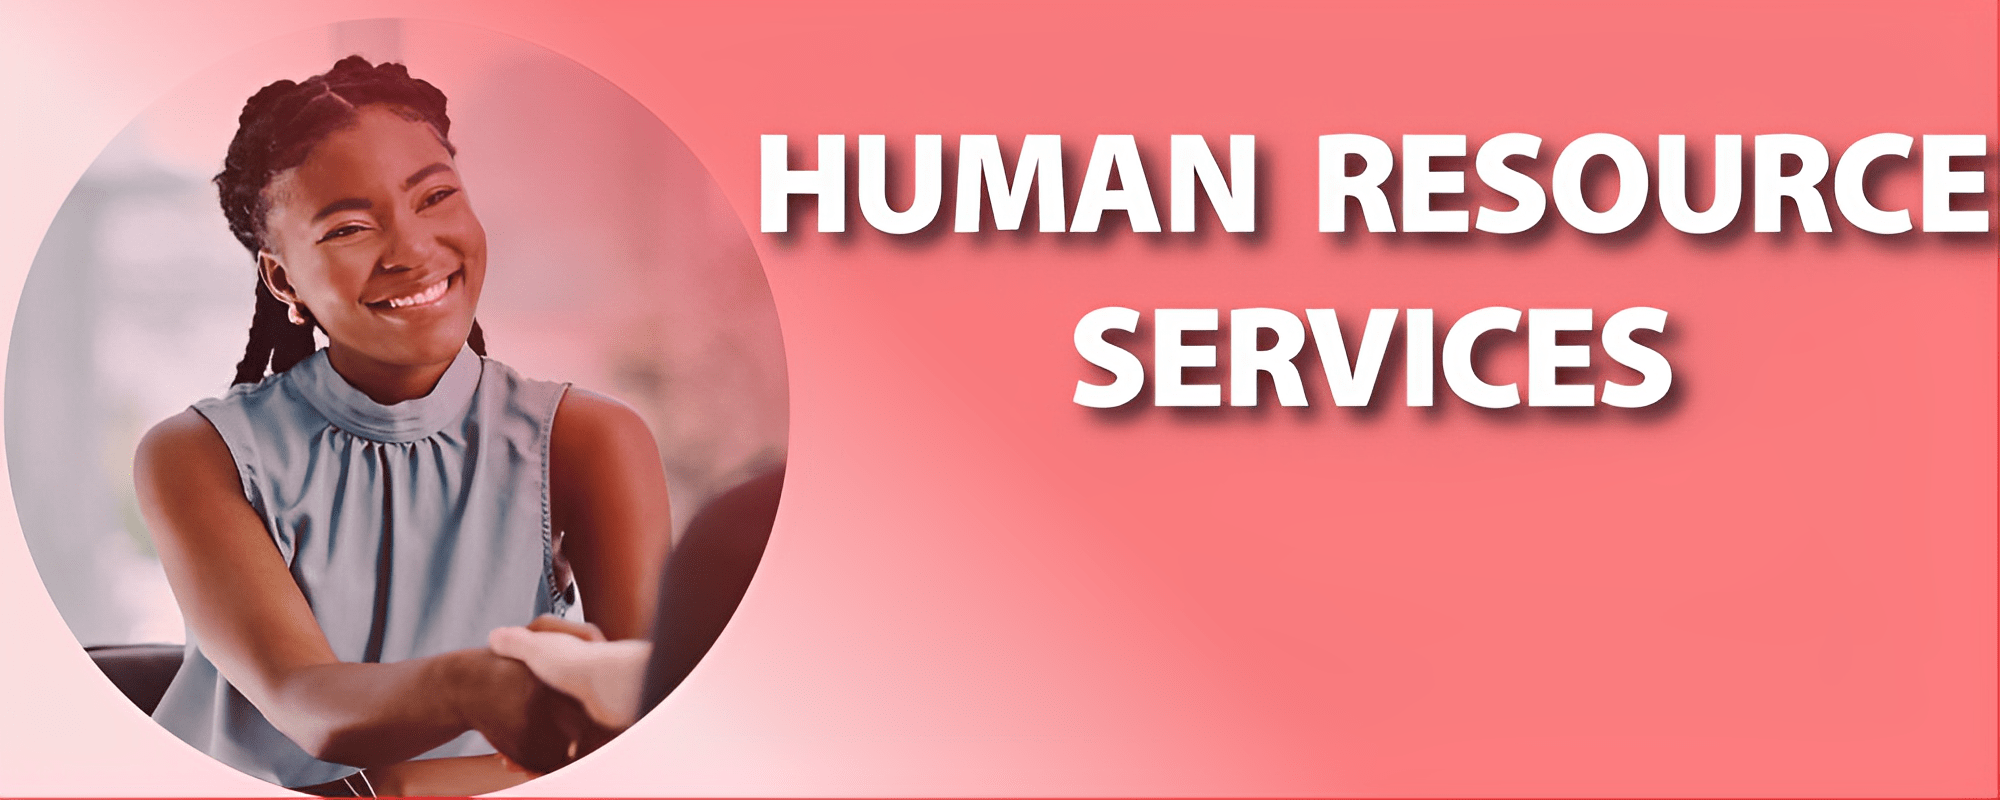 Human Resource Services in Rwanda